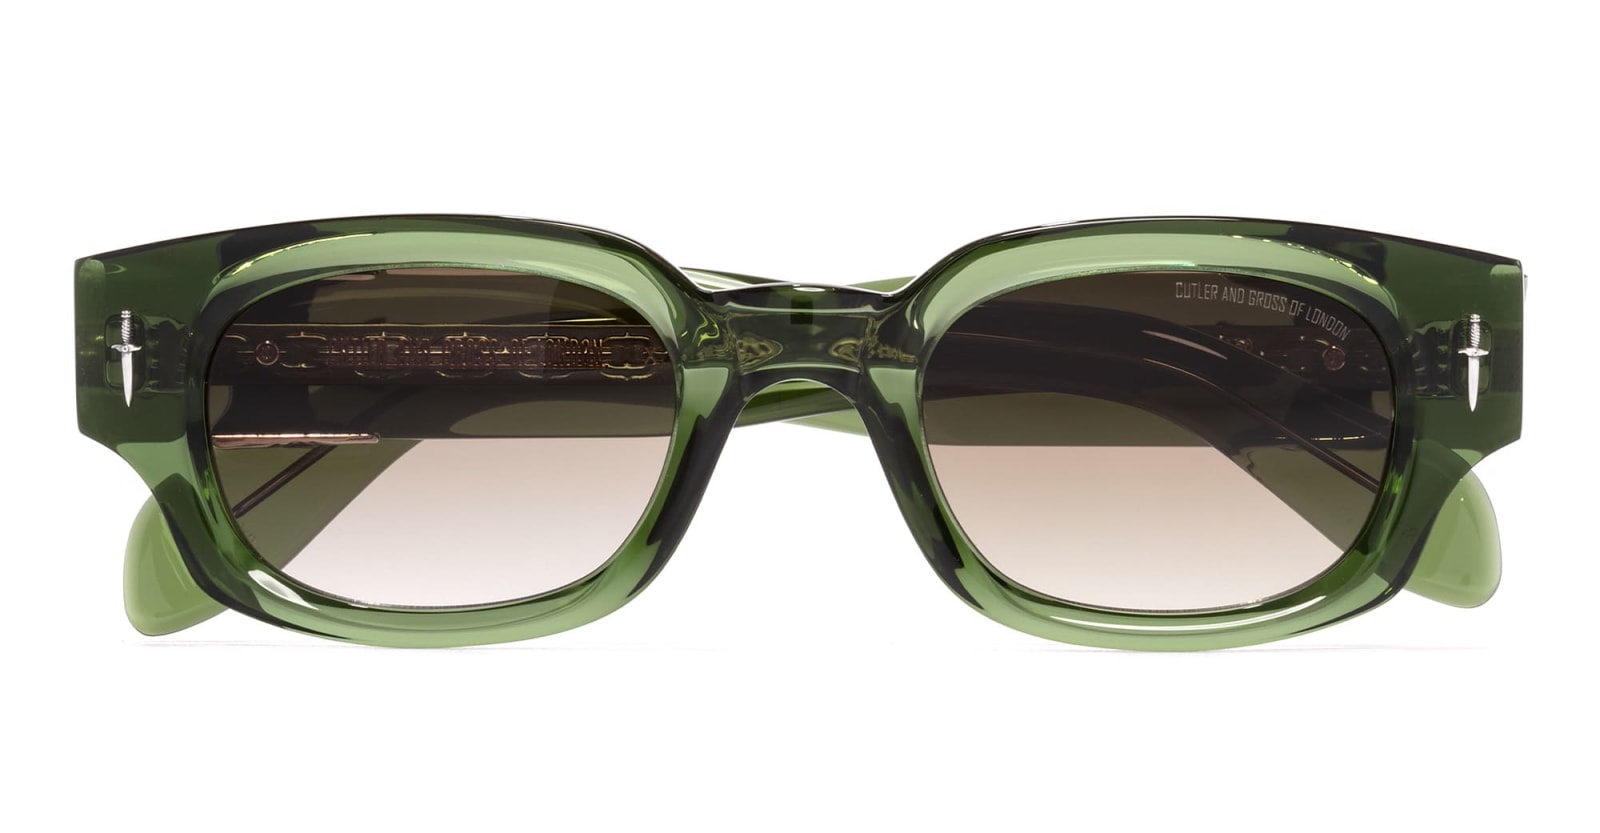 The Great Frog - Soaring Eagle / Leaf Green Sunglasses